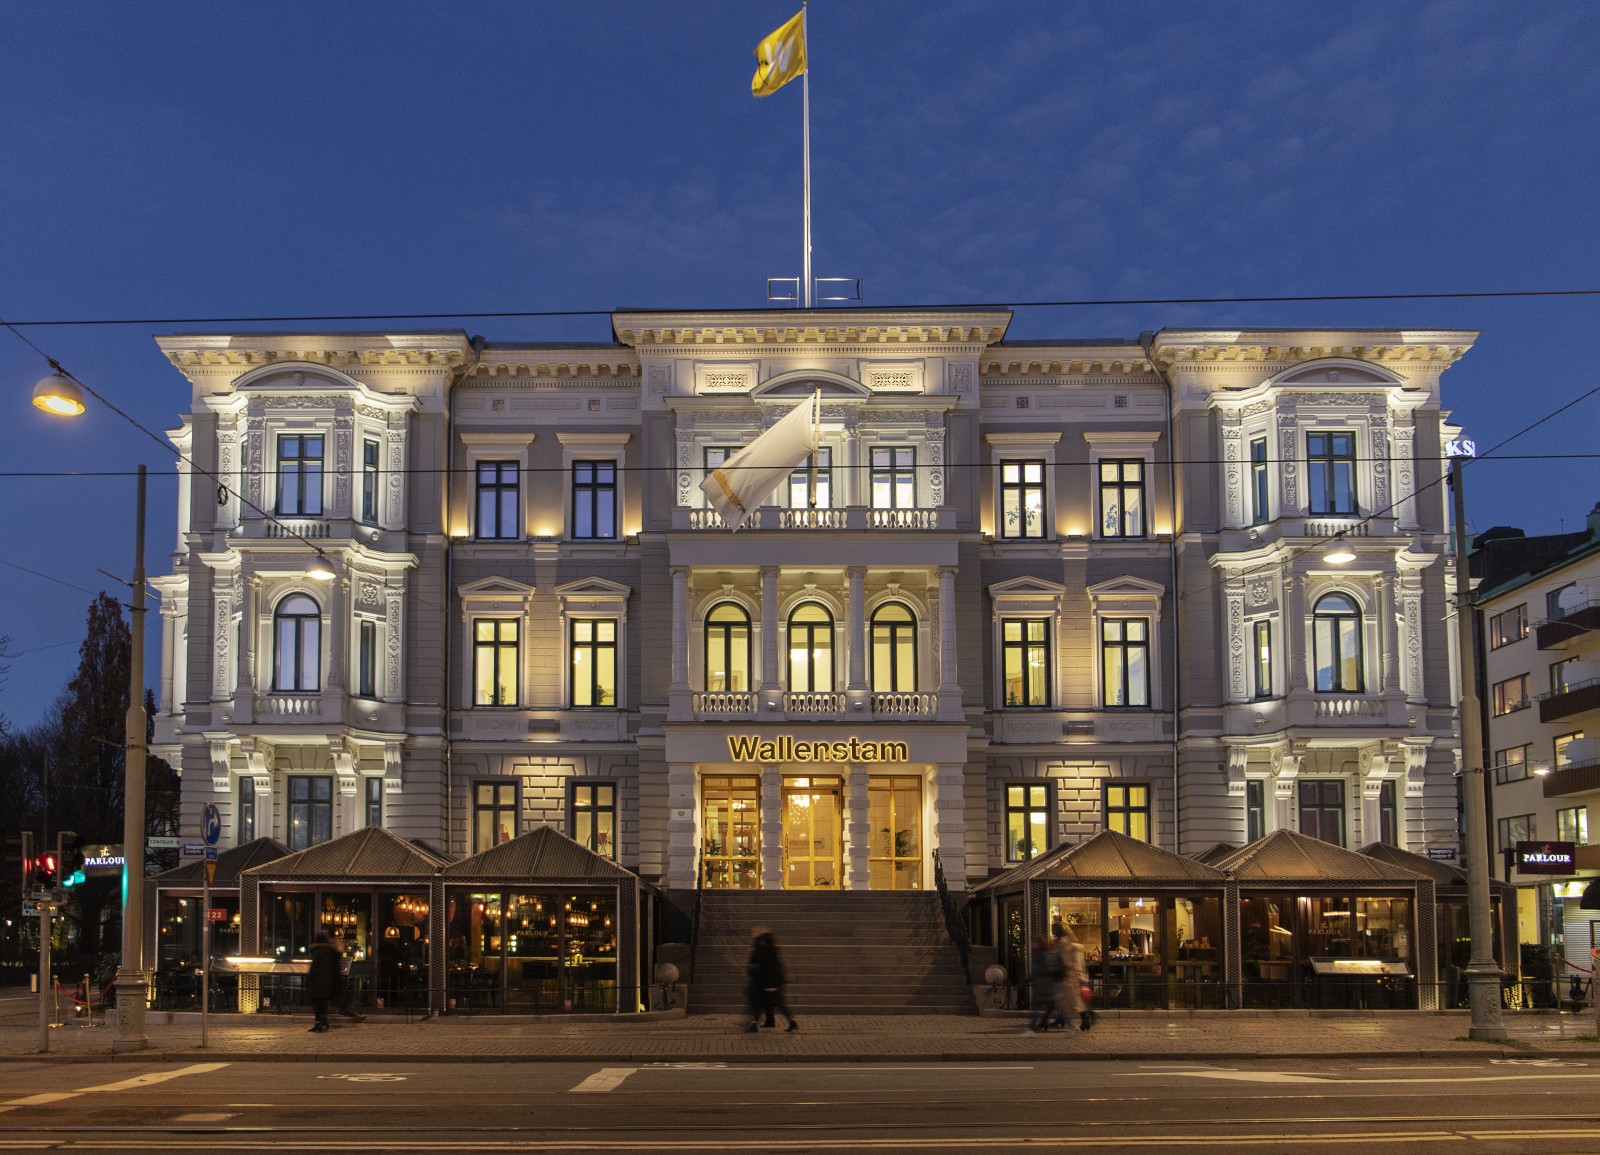 <h1>Wallenstam Gothenburg</h1><h4>- great facades should be lit</h4>